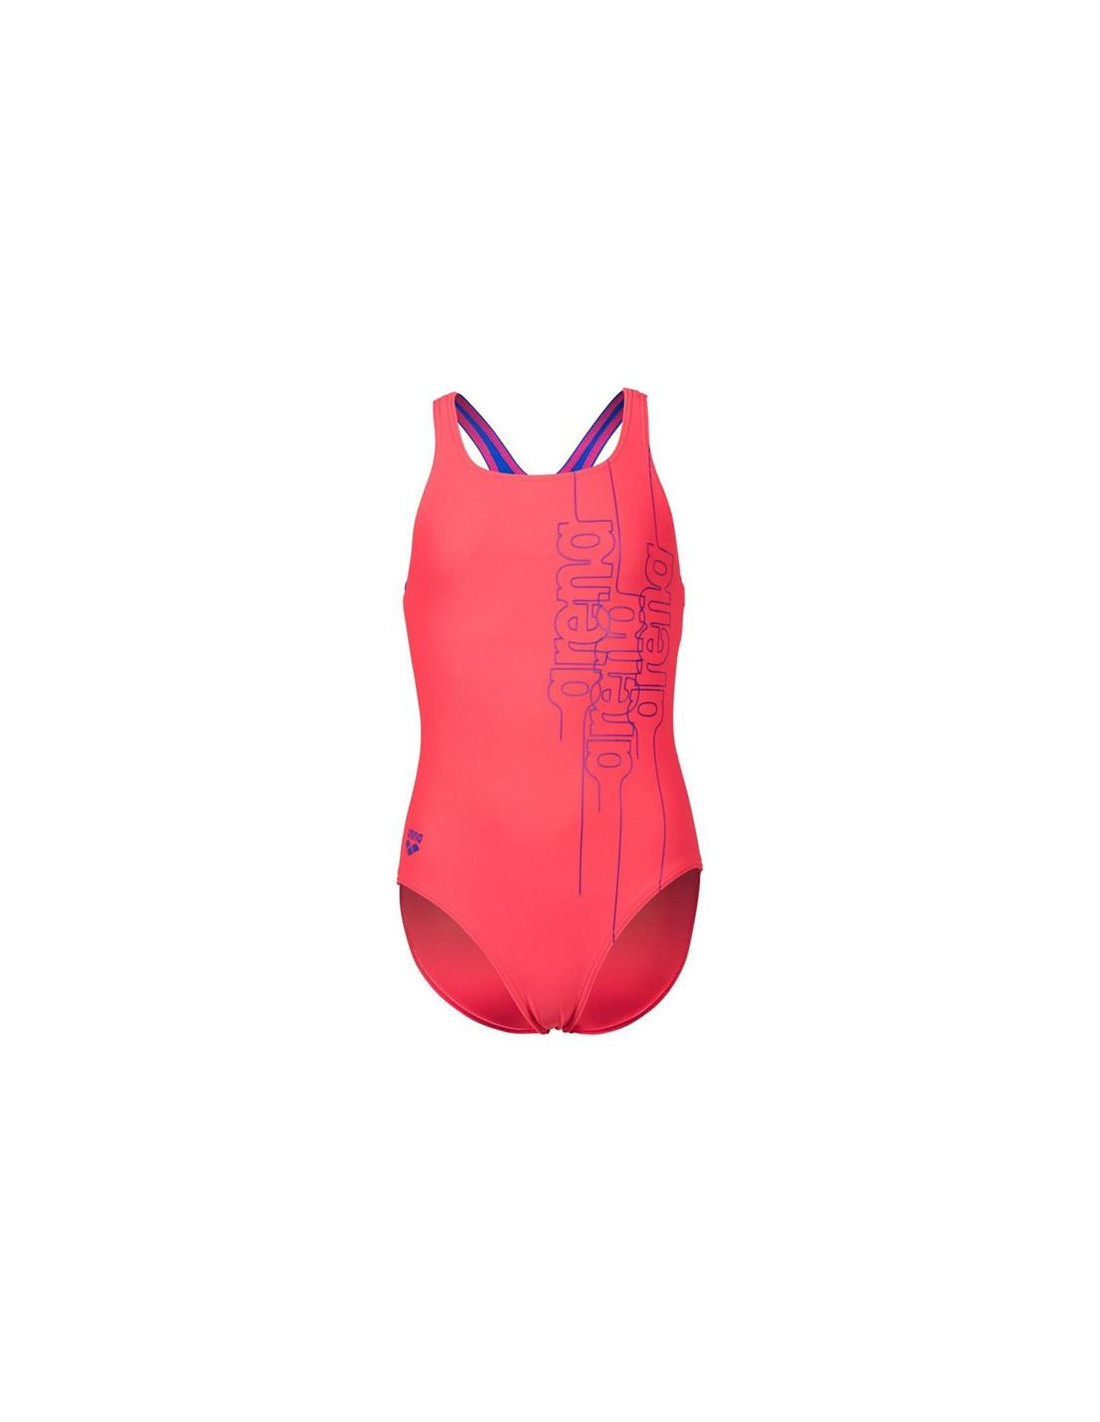 https://media.atmosferasport.es/313956-thickbox_default/banador-de-natacion-arena-swimsuit-swim-pro-back-graphic-l-fluo-red-infantil.jpg